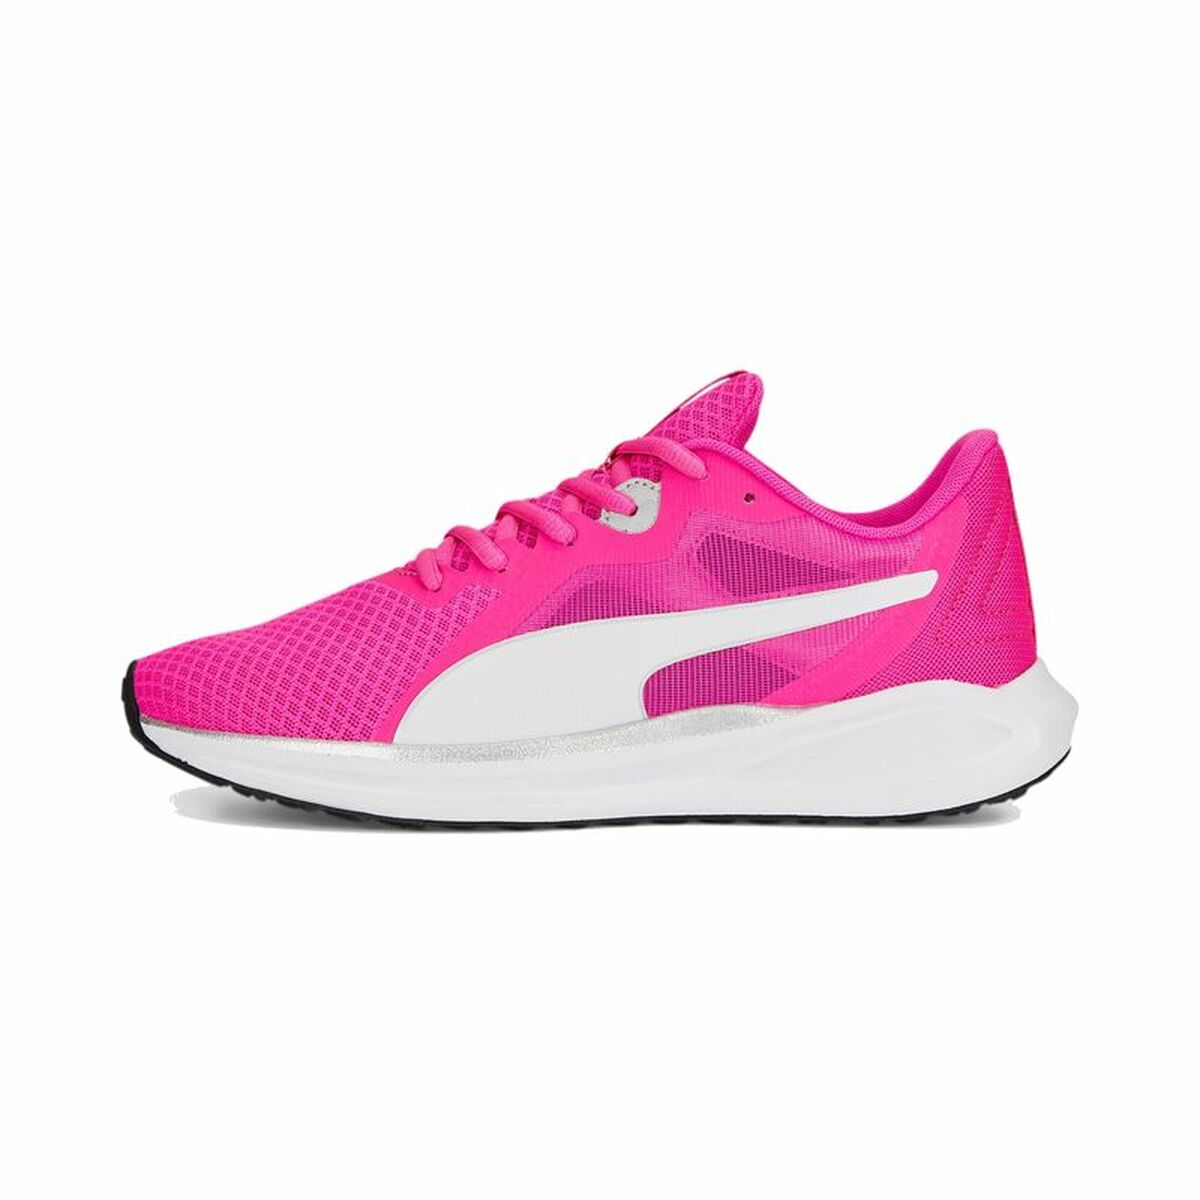 Kaufe Laufschuhe für Damen Puma Twitch Runner Fresh Pink Damen bei AWK Flagship um € 71.00